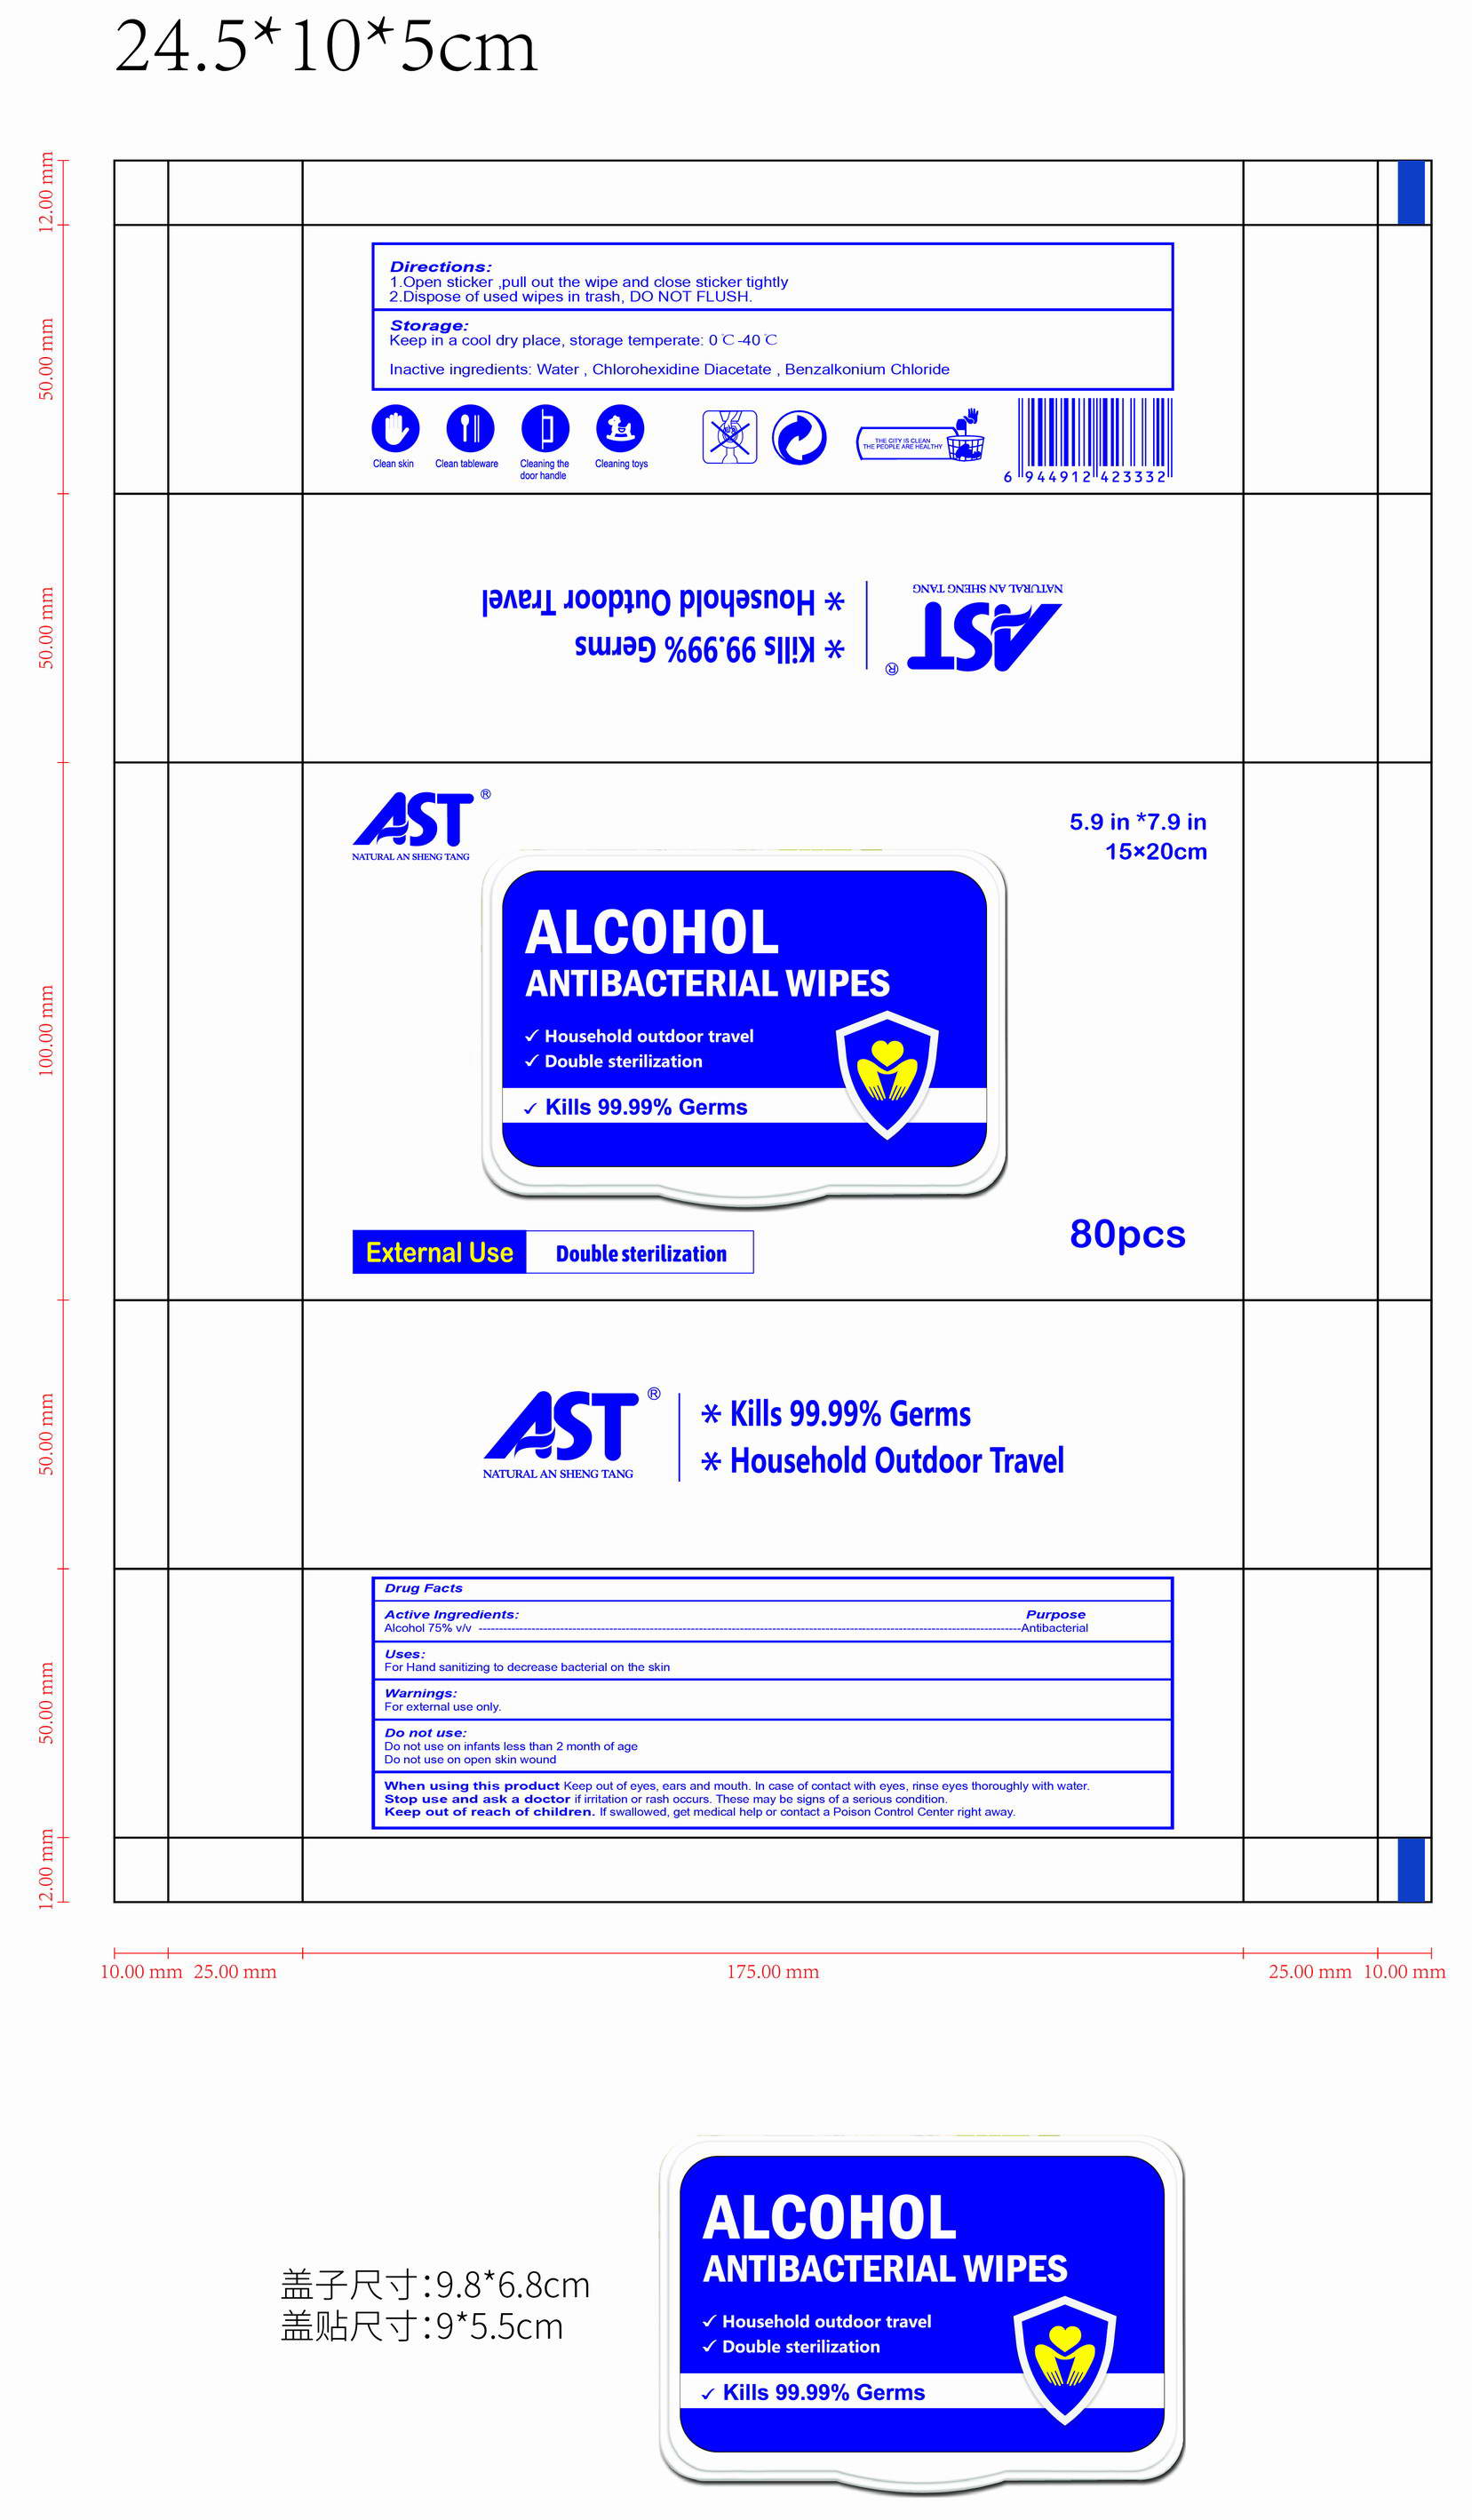 wipes ndc alcohol 80pcs ast bag label dailymed antibacterial